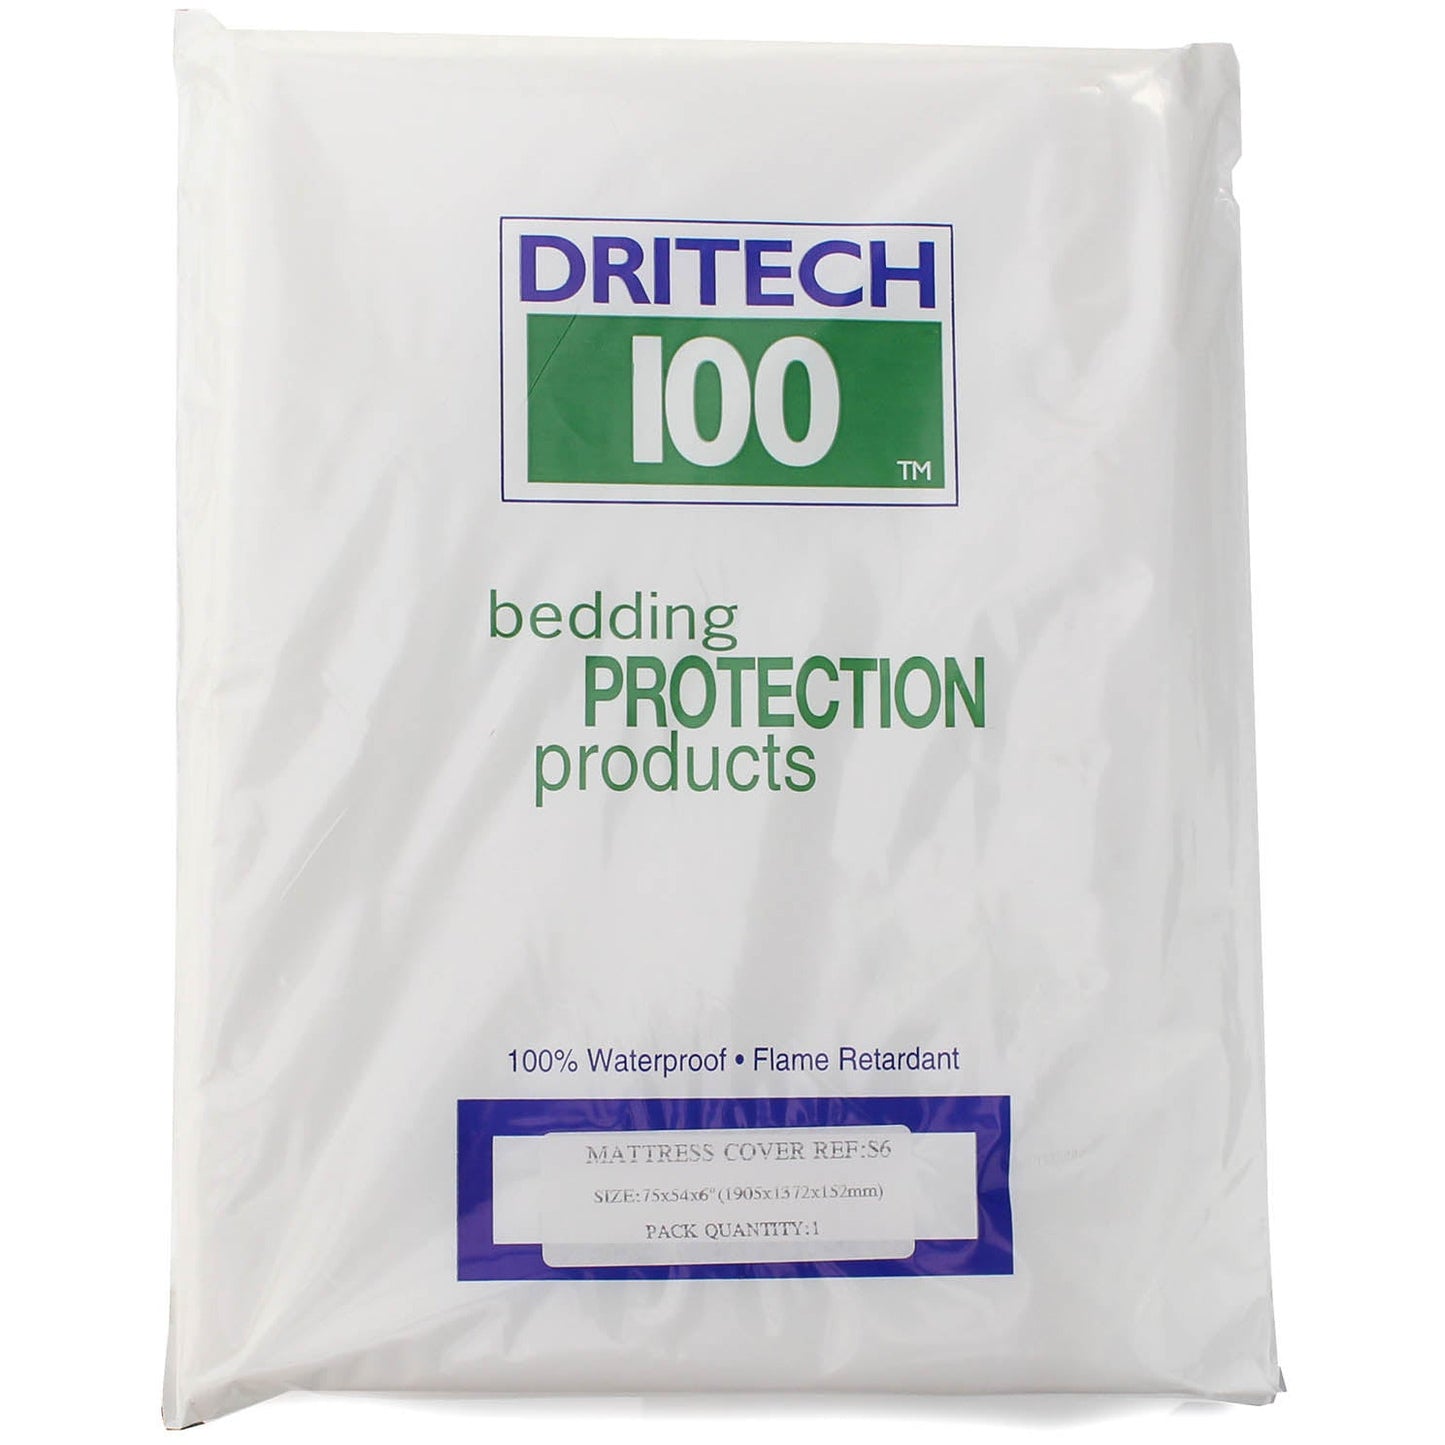 Dritech Waterproof Double Mattress Cover - 75 x 54 x 6in